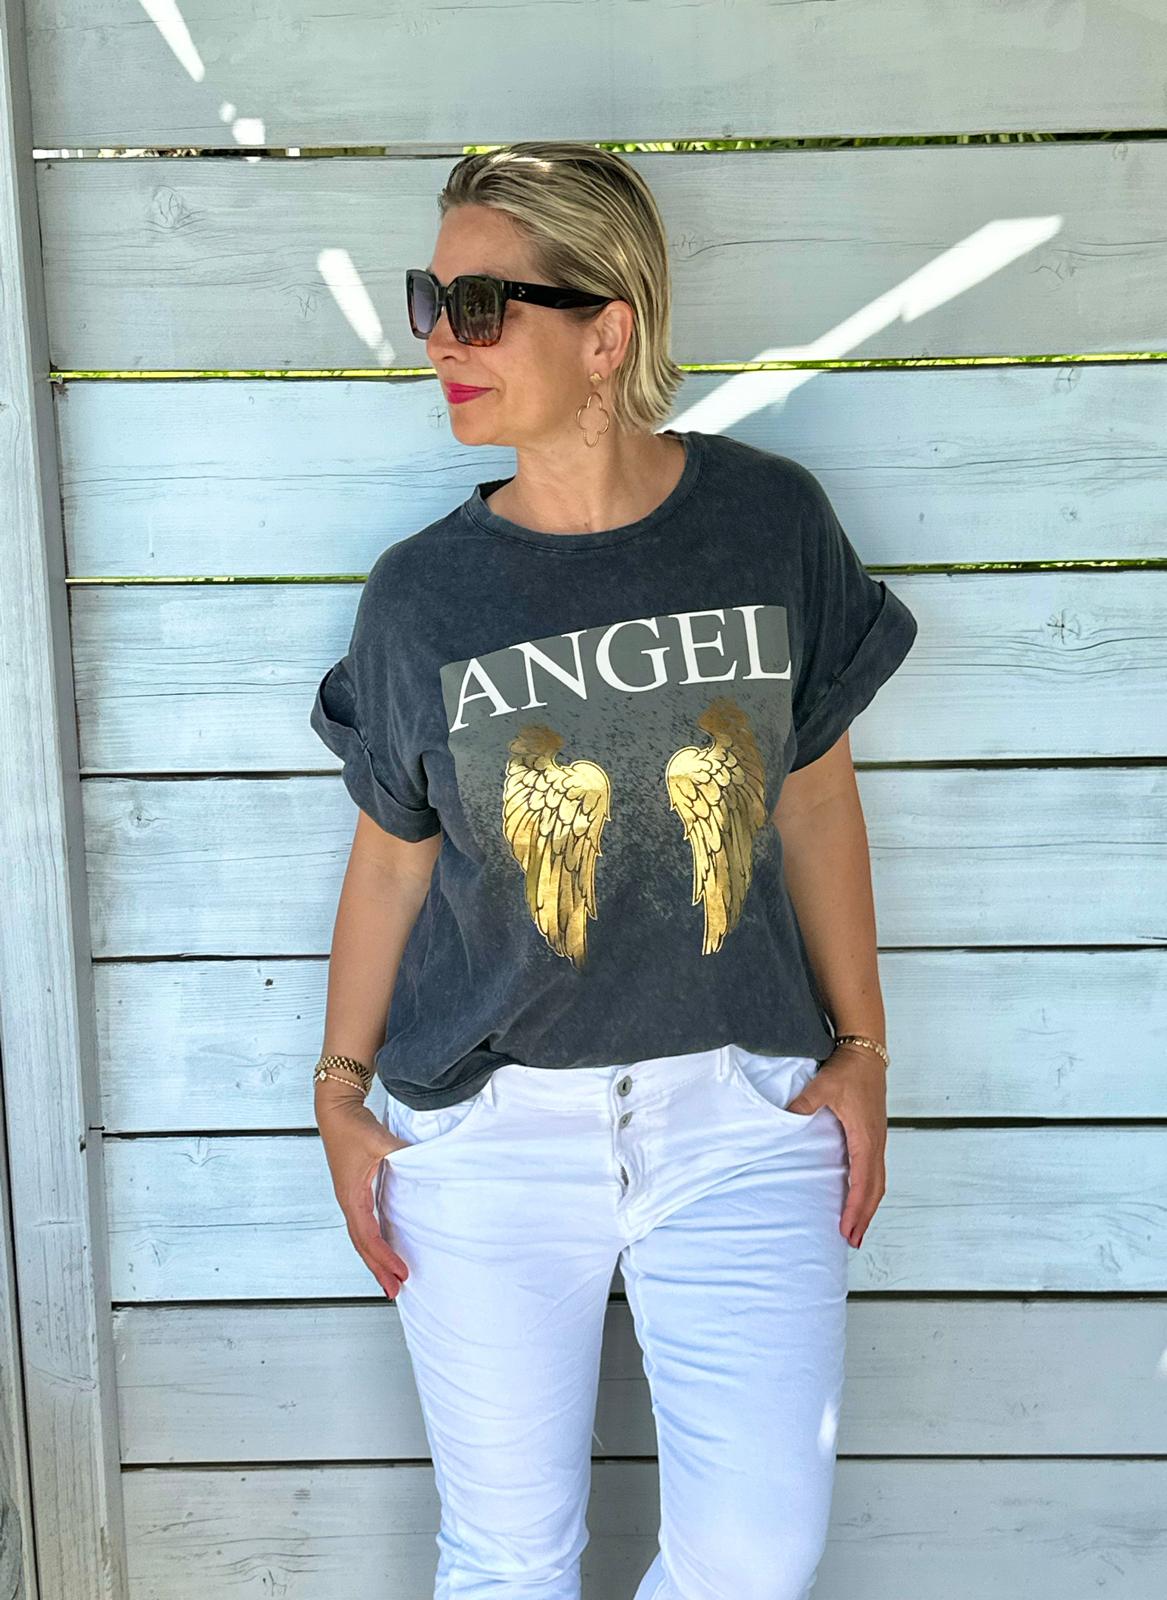 Zuckersüßes Onesize T-Shirt mit "ANGEL" Print in Stoned-washed